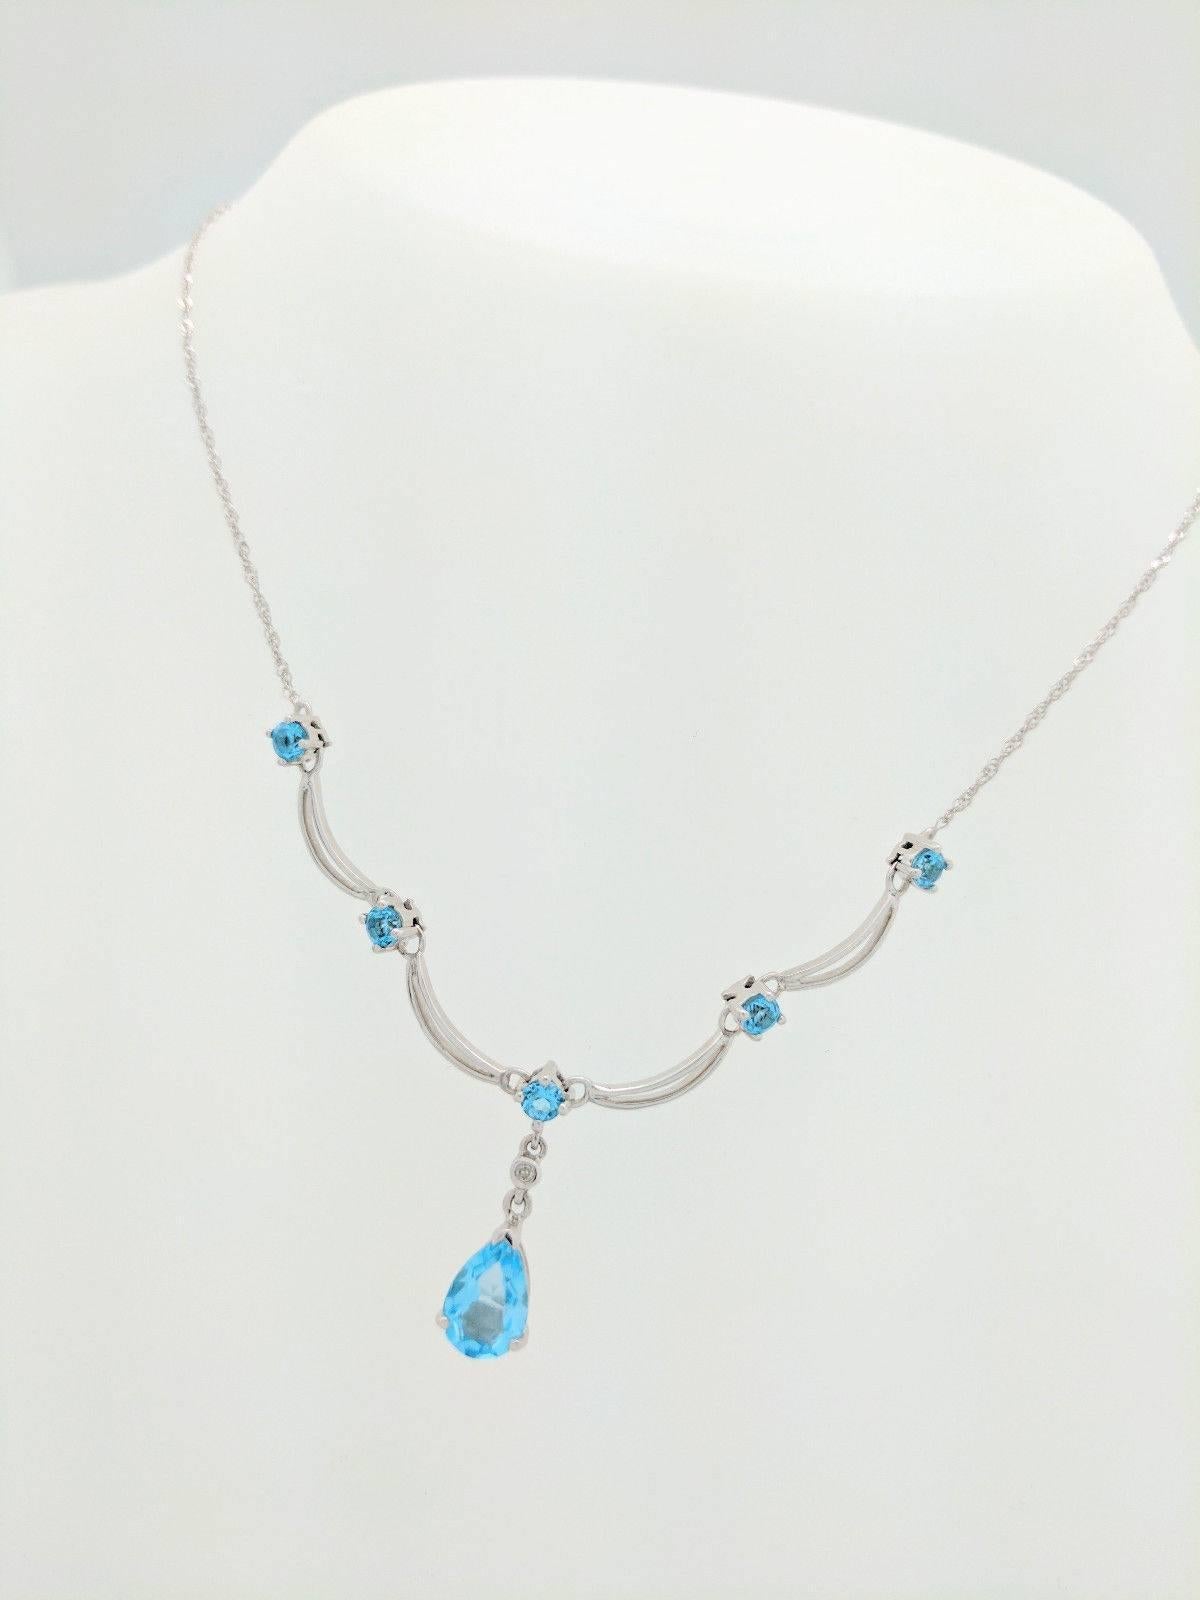  10K White Gold Blue Topaz Gemstone Necklace 17